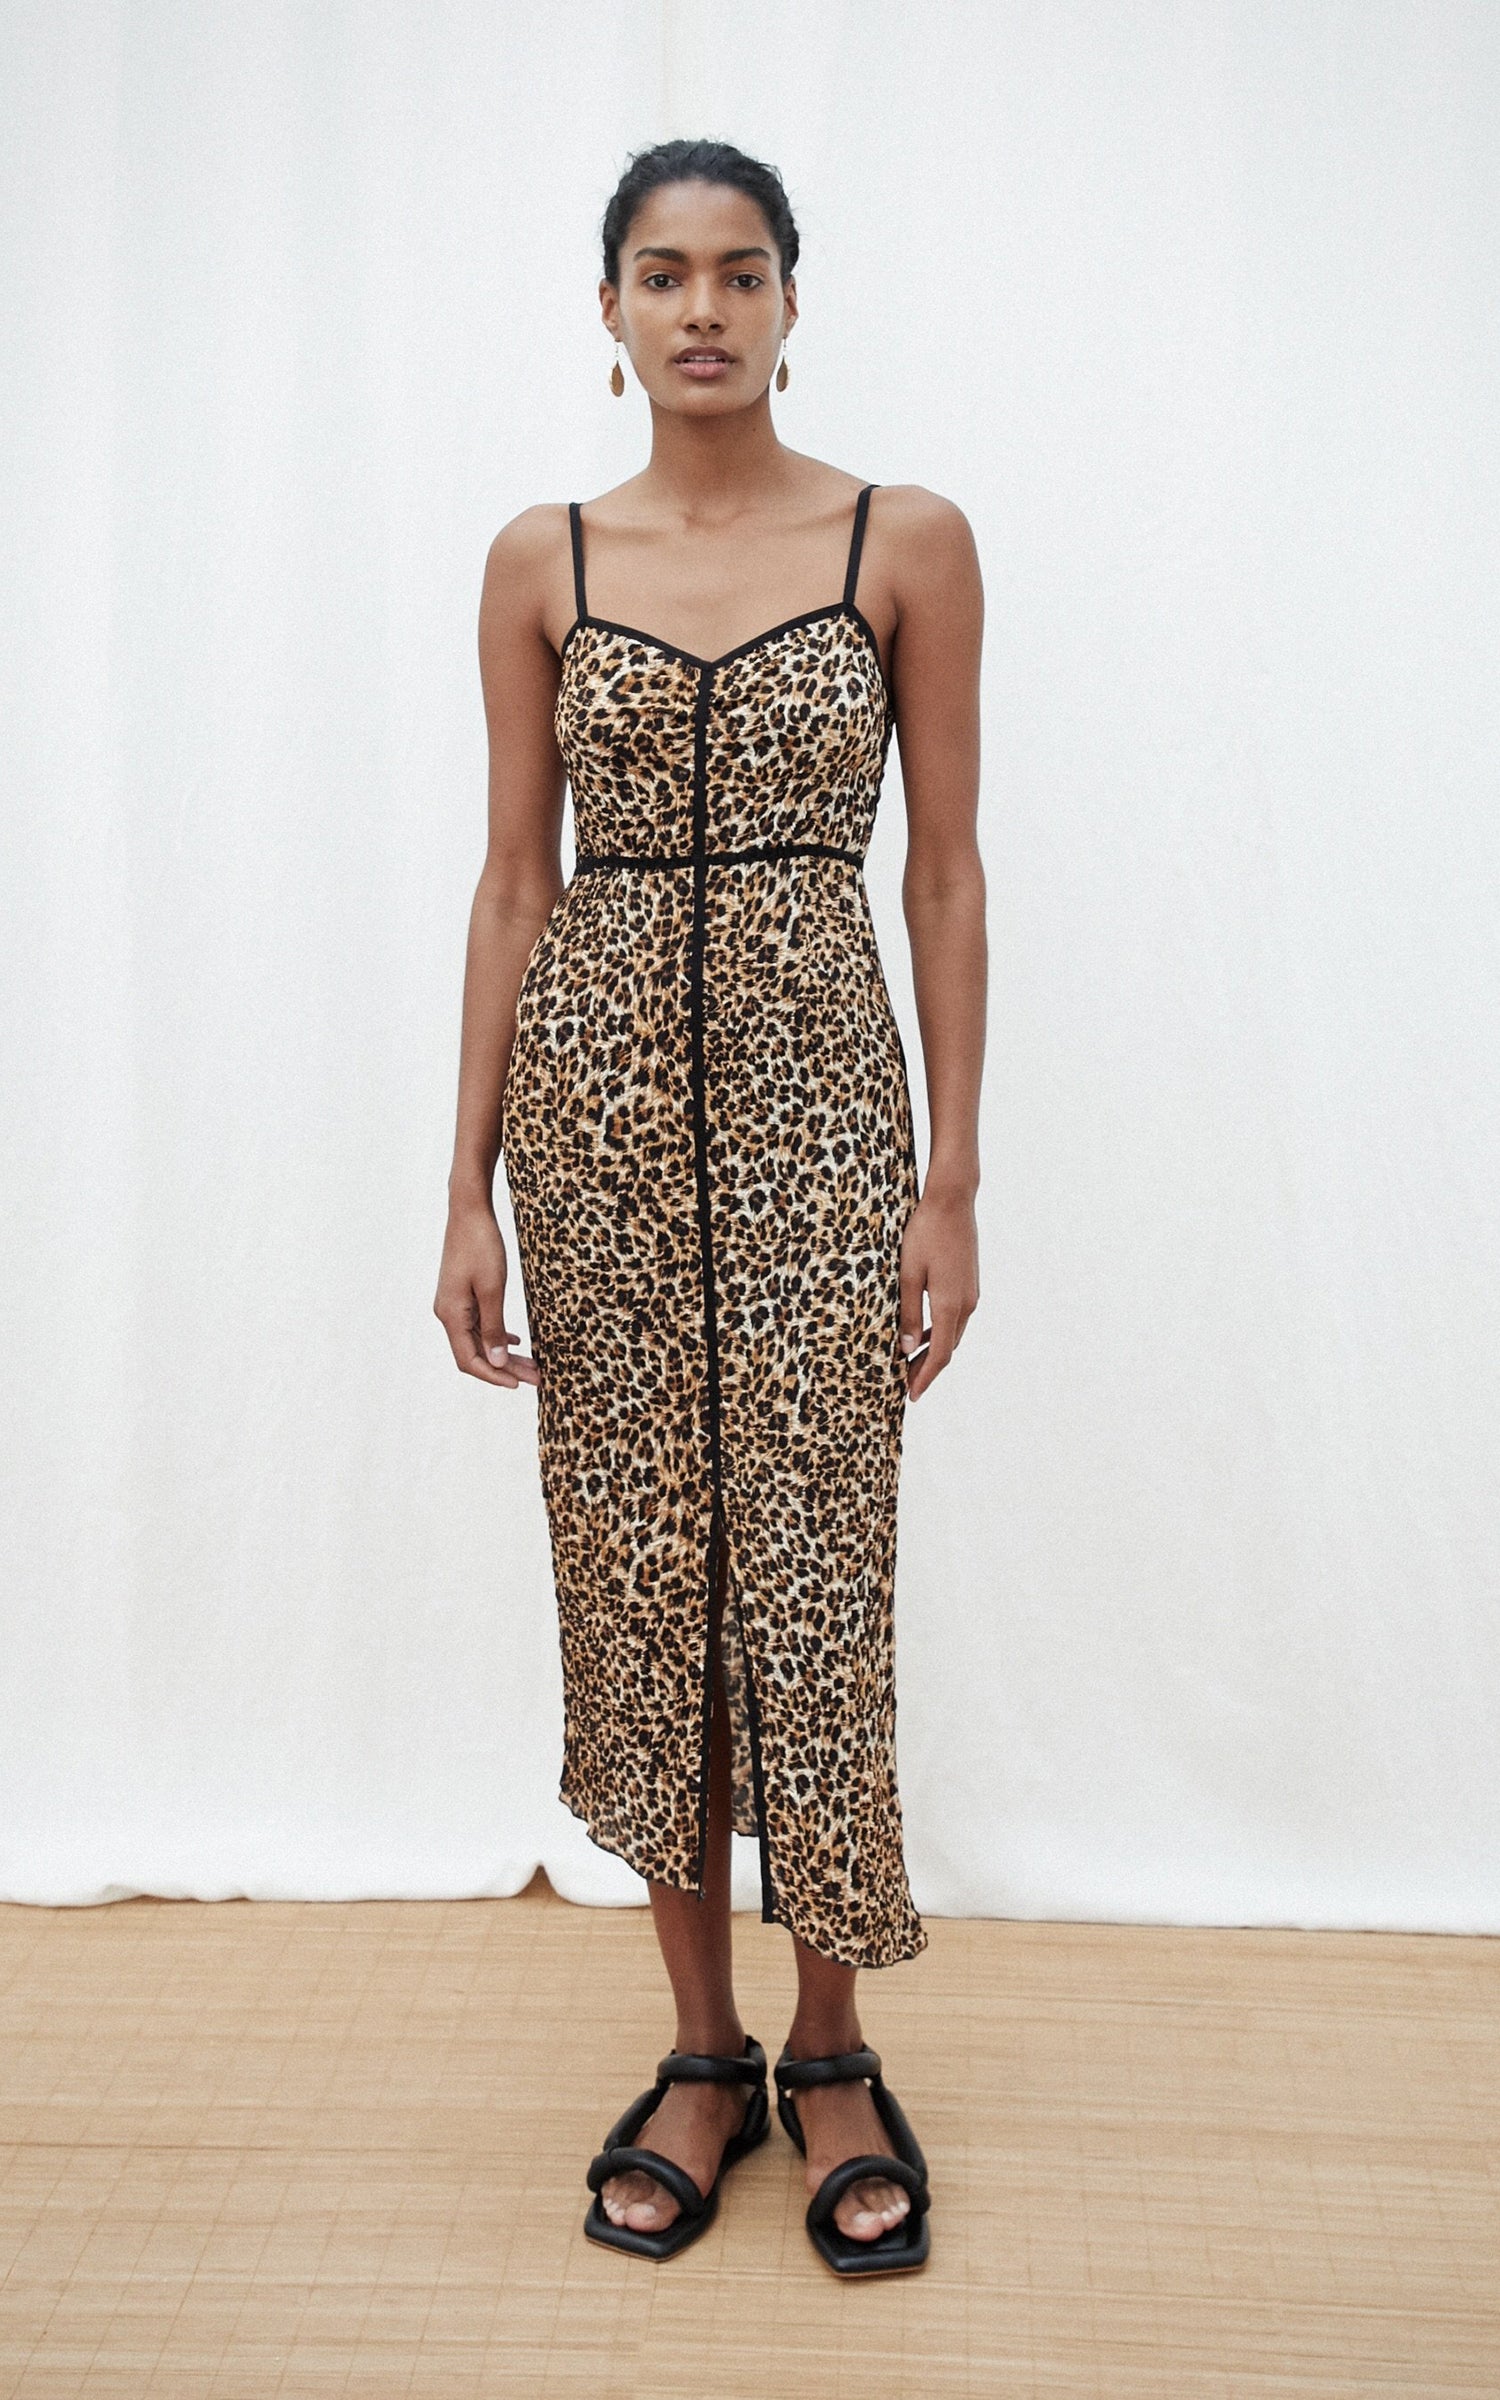 nanushka leopard dress